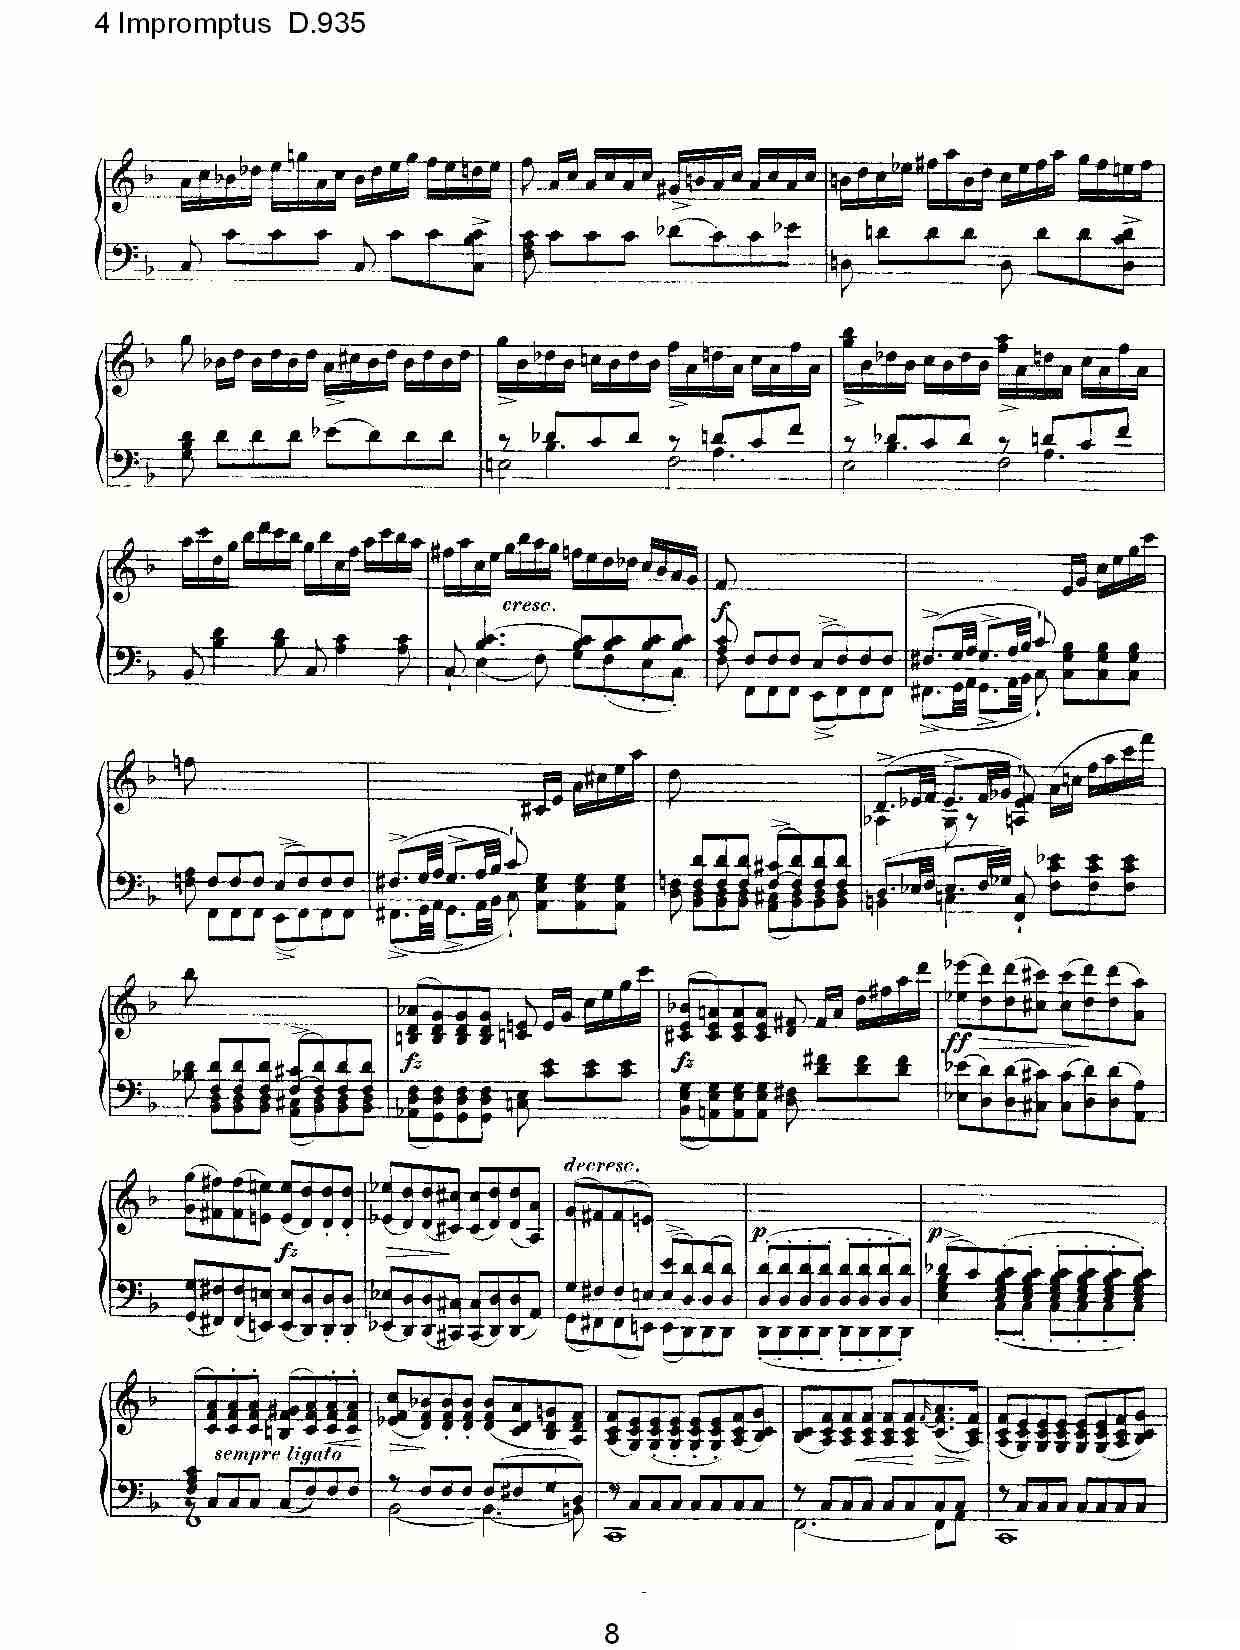 4 Impromptus D.935（4人即兴演奏D.935）钢琴曲谱（图8）